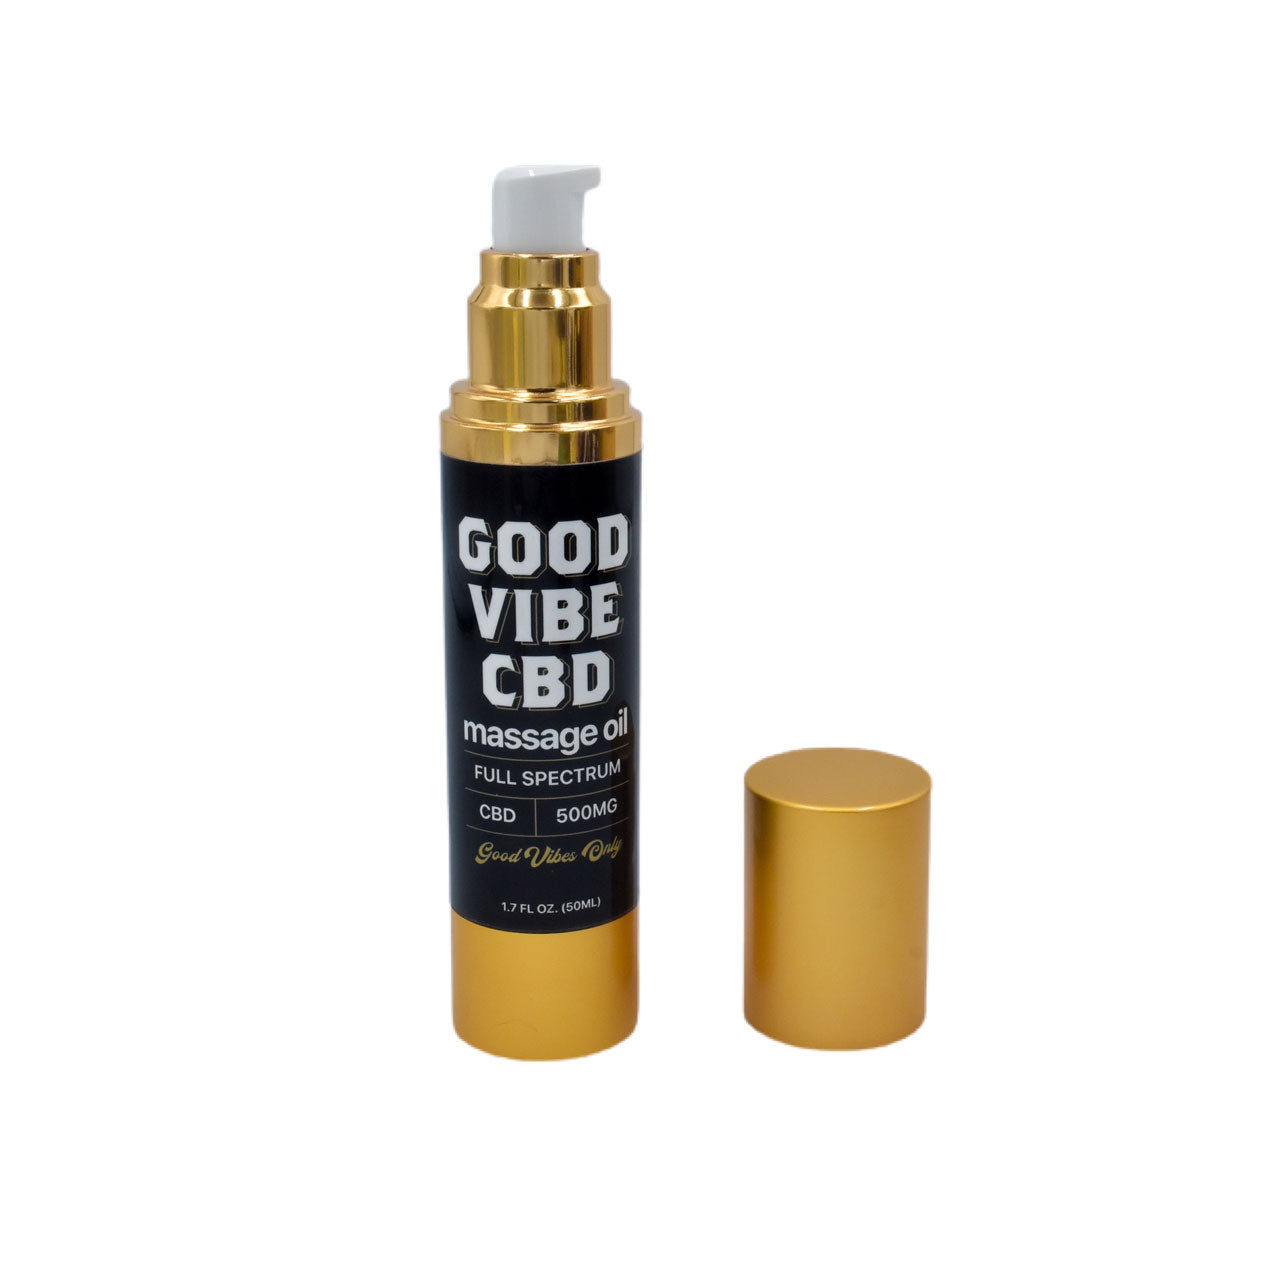 Good Vibe CBD Massage Oil